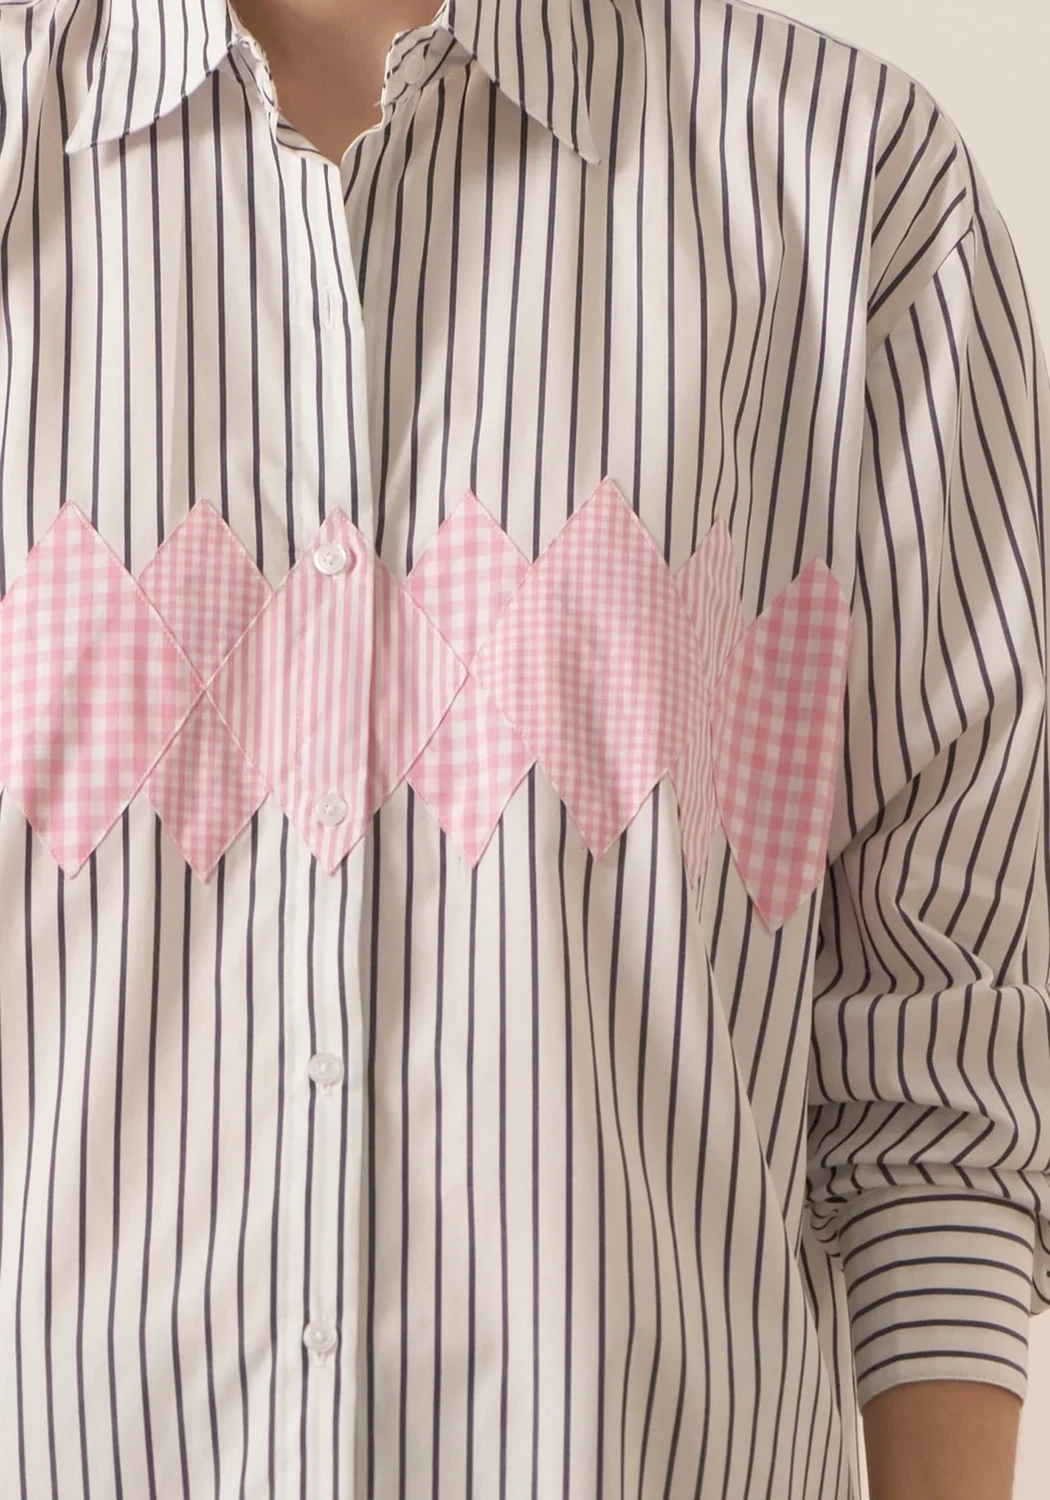 Dewey Patchwork Shirt, Colour: Pink Check, Size: 8